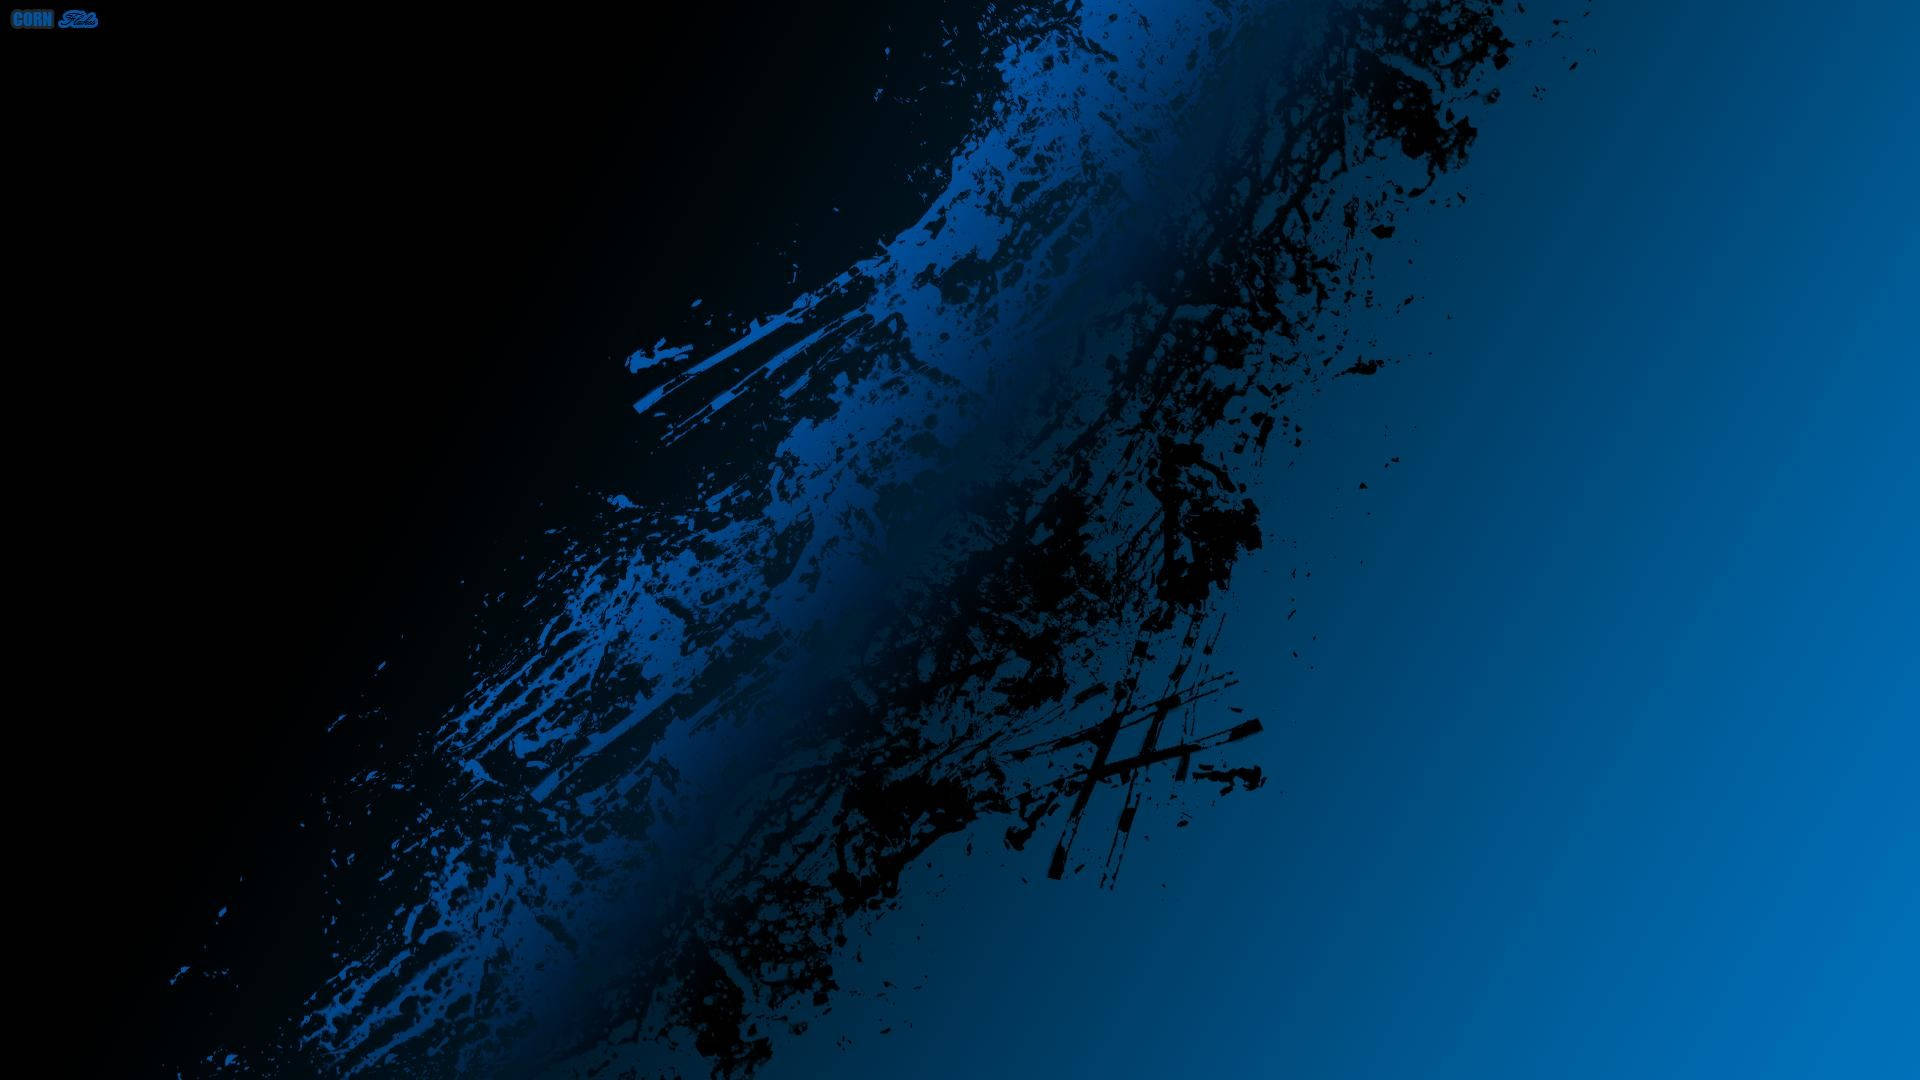 Black And Blue Contrast 1080p Hd Desktop Wallpaper